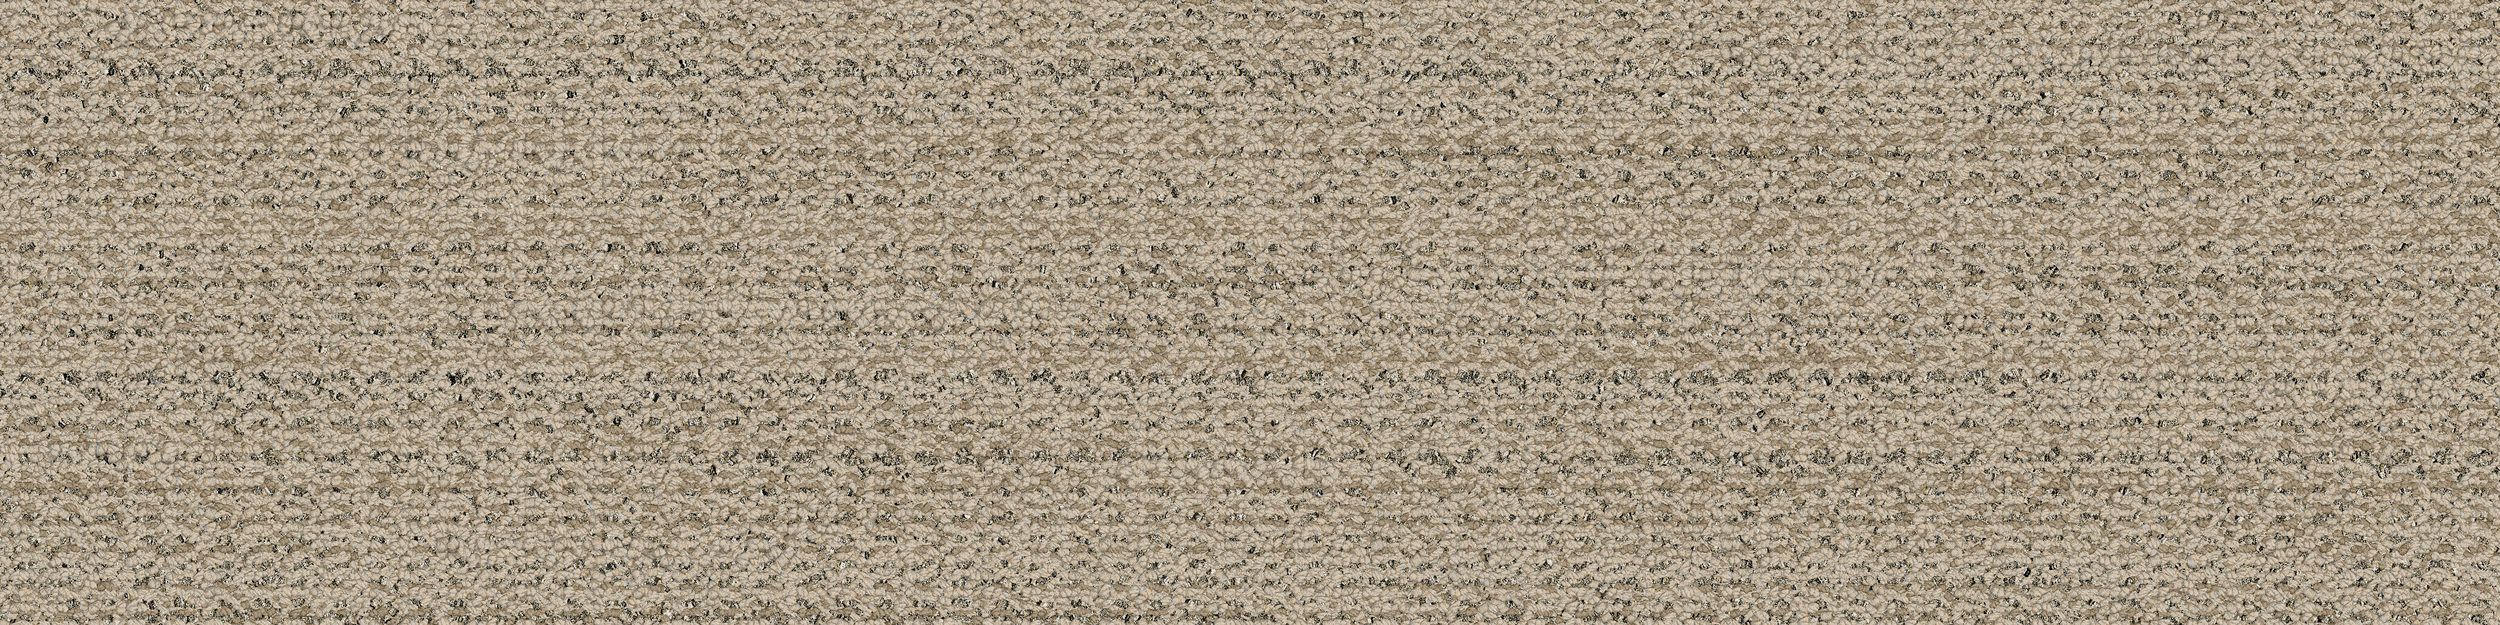 WW870 Carpet Tile In Raffia Weft número de imagen 2